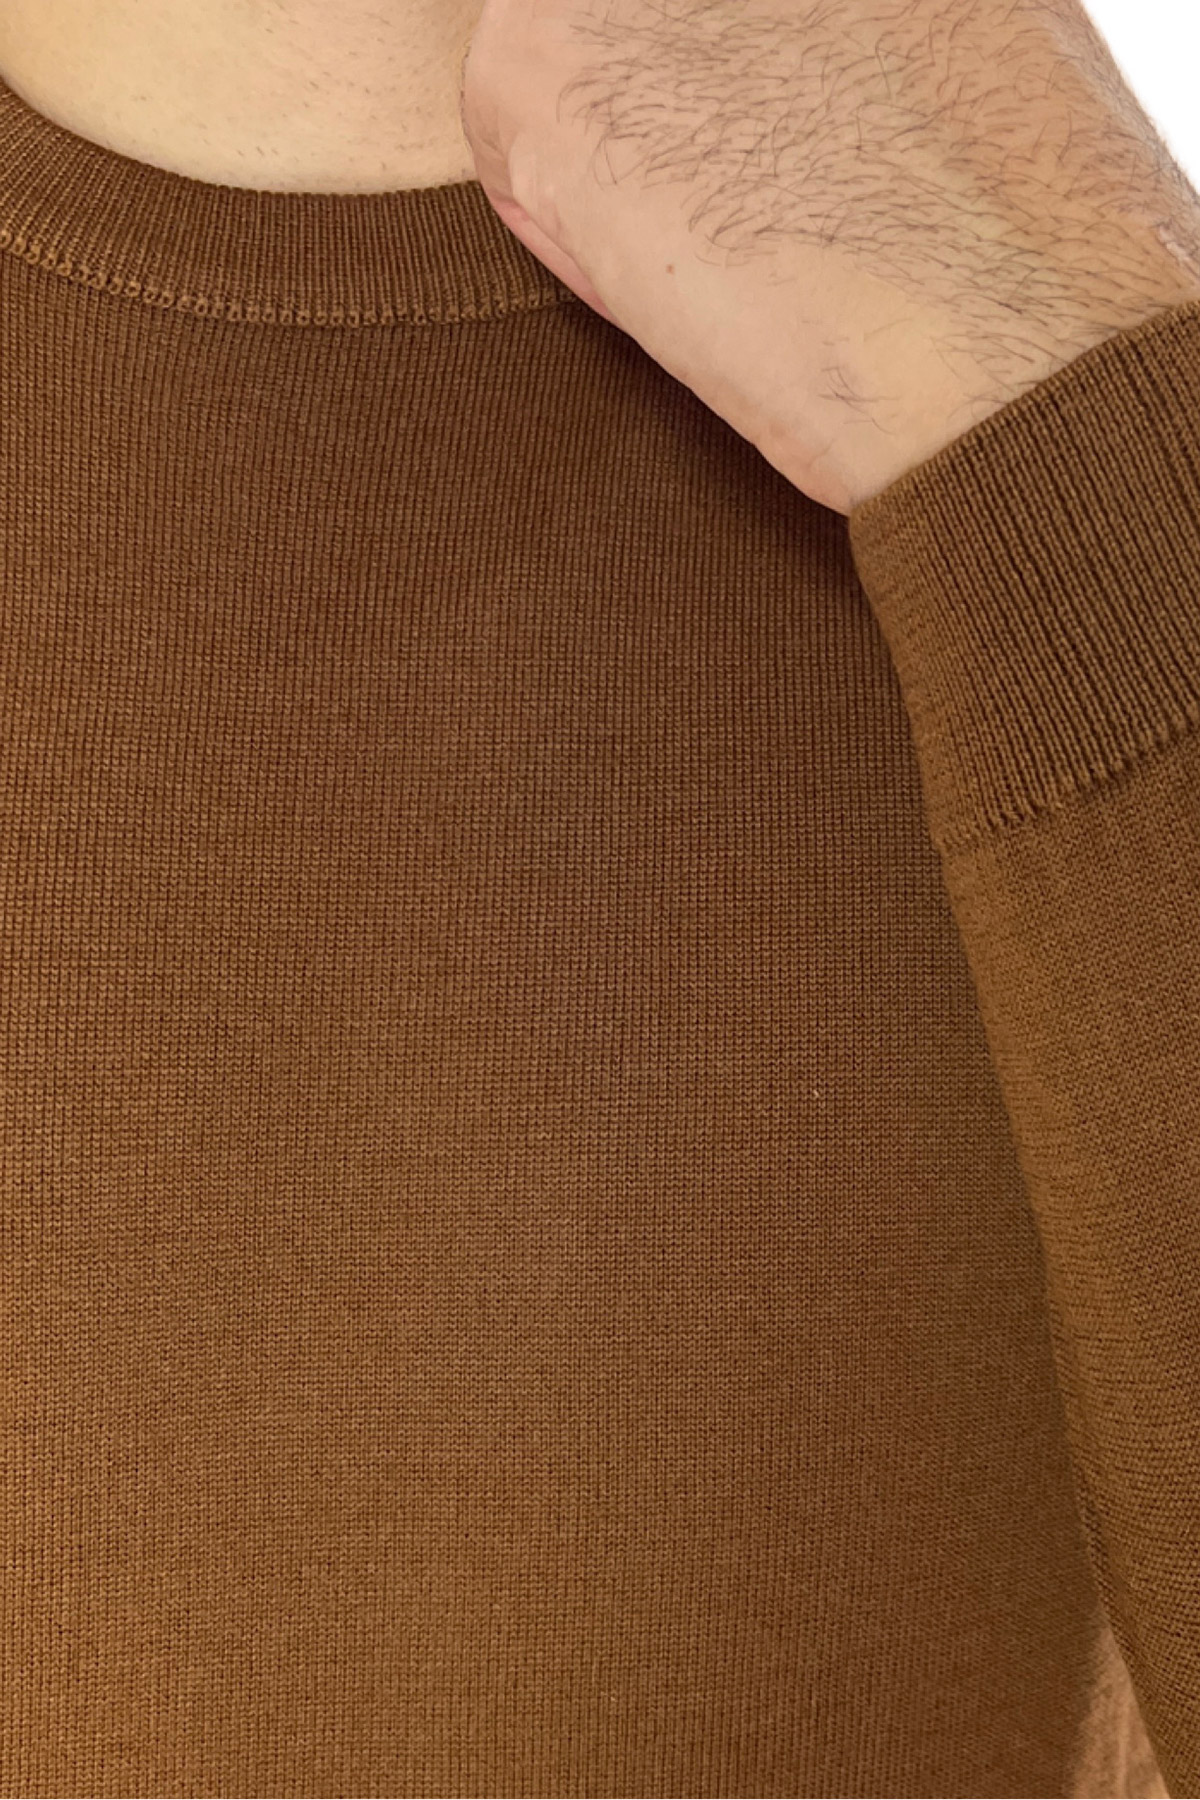 Maglioncino da uomo girocollo nocciola in lana merinos slim fit made in italy tinta unita